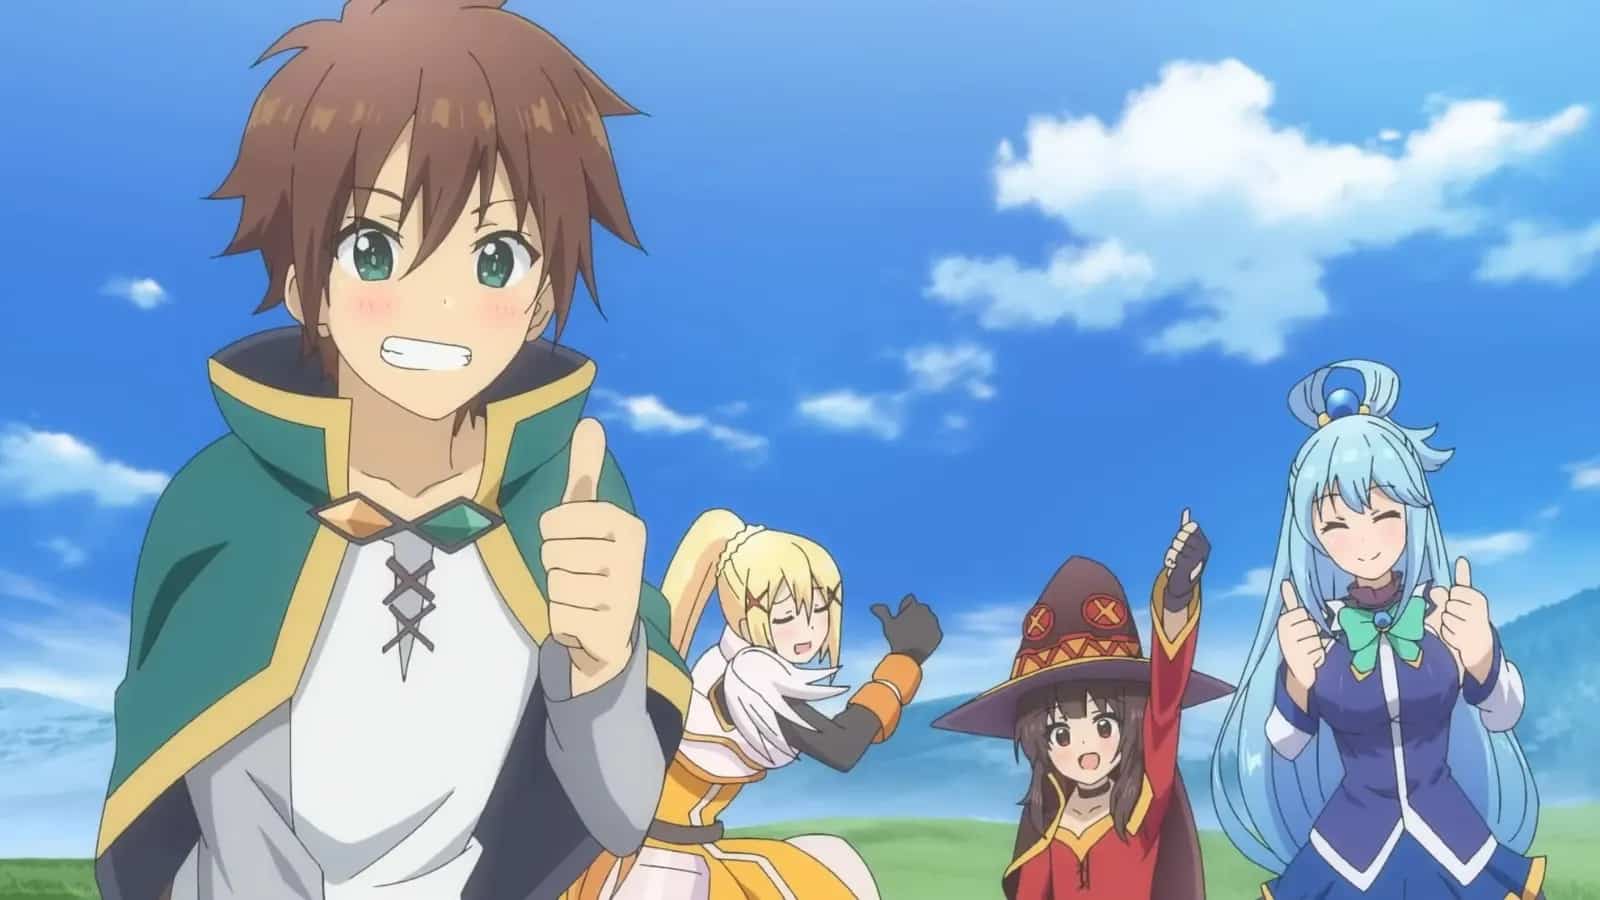 KonoSuba main characters smiling and posing against a blue sky